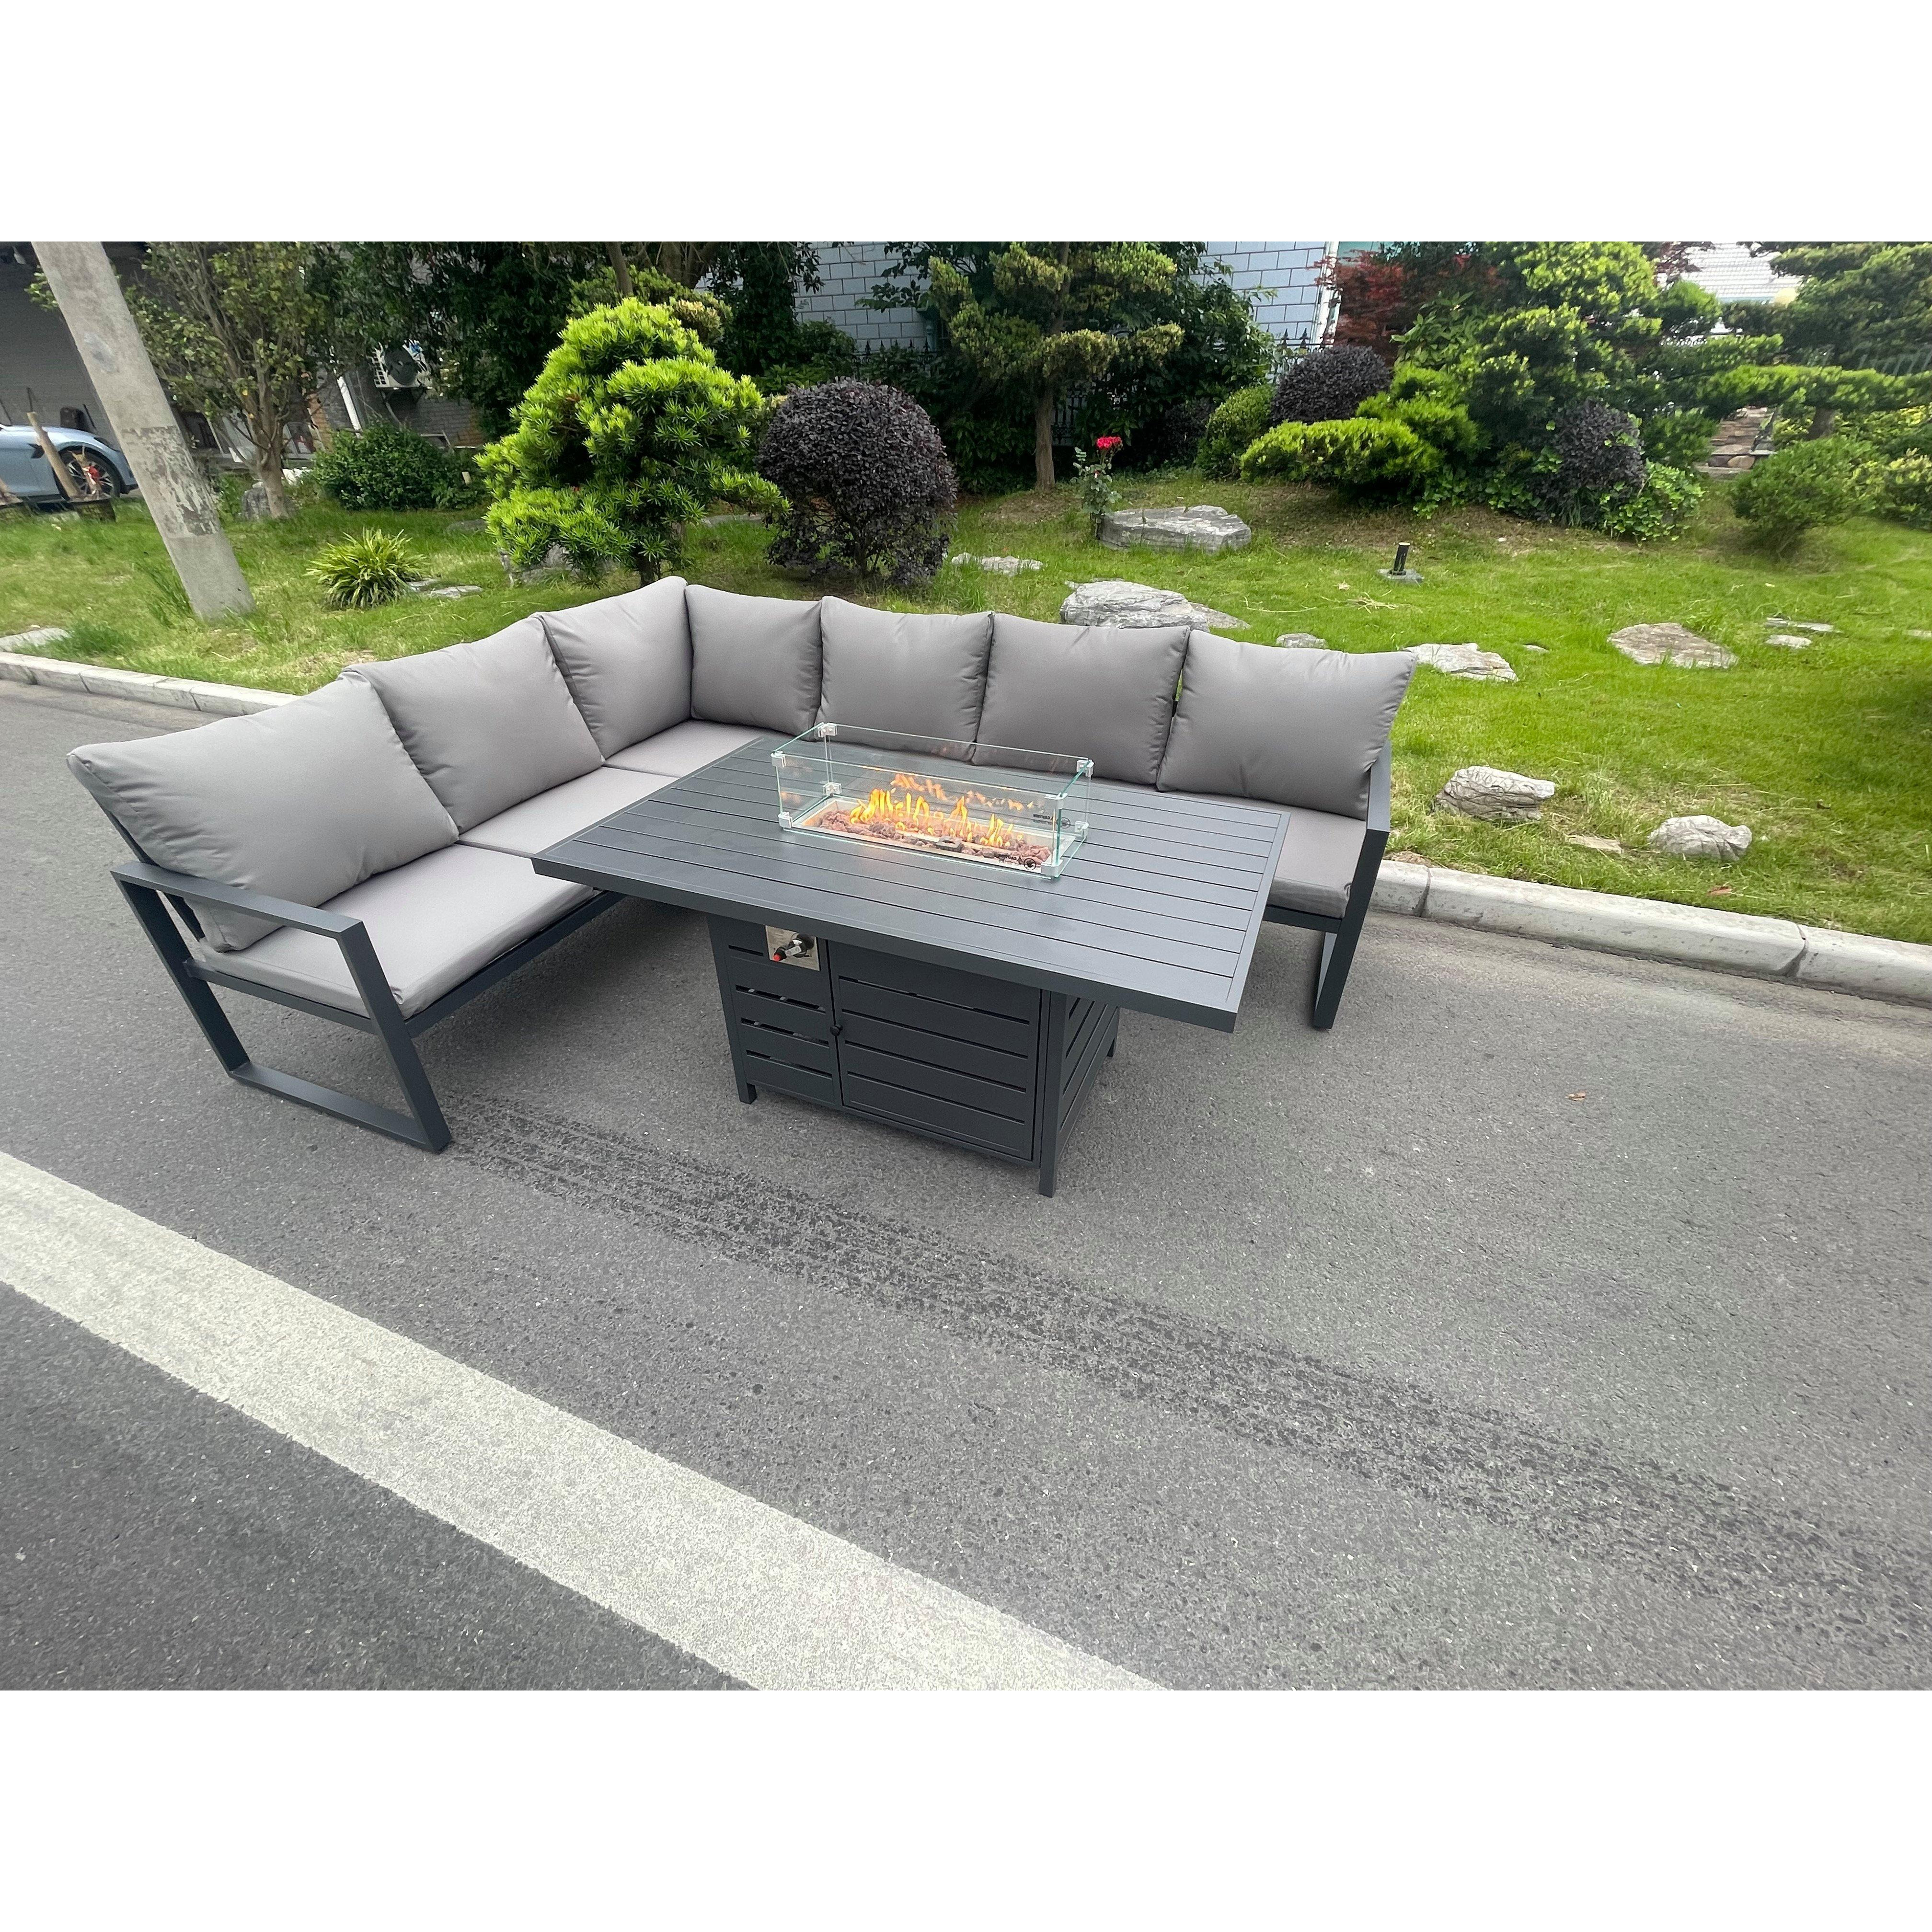 Aluminium Outdoor Garden Furniture Corner Sofa Gas Fire Pit Dining Table Sets Gas Heater Burner Dark Grey 6 Seater - image 1